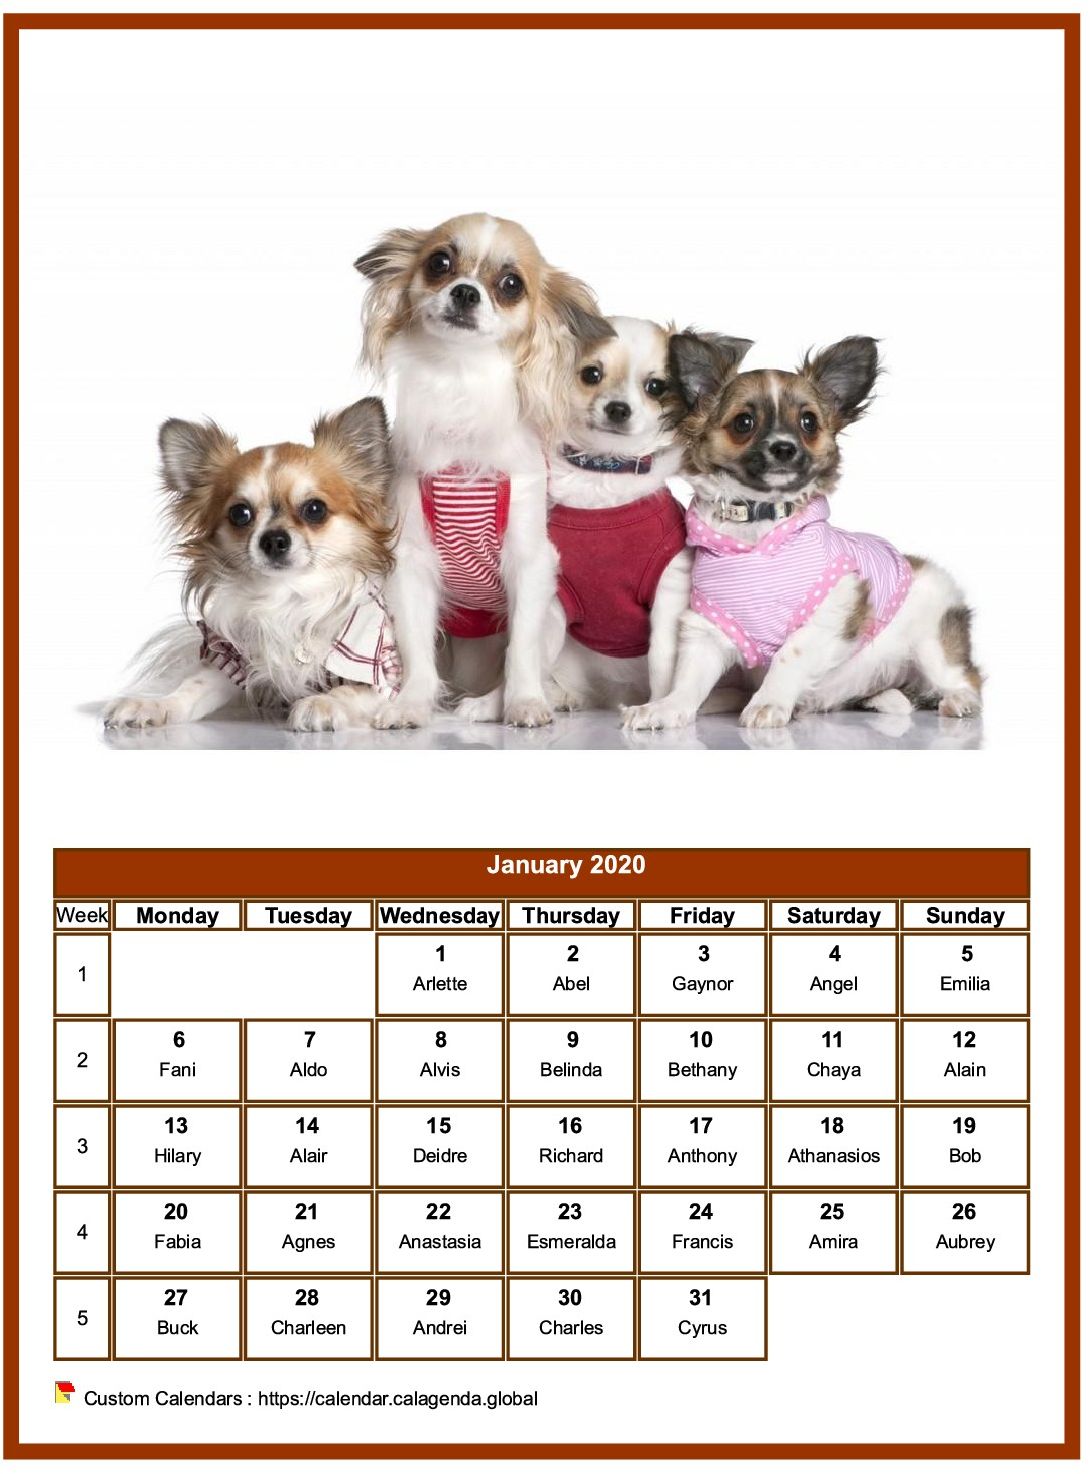 Calendar January 2020 dogs